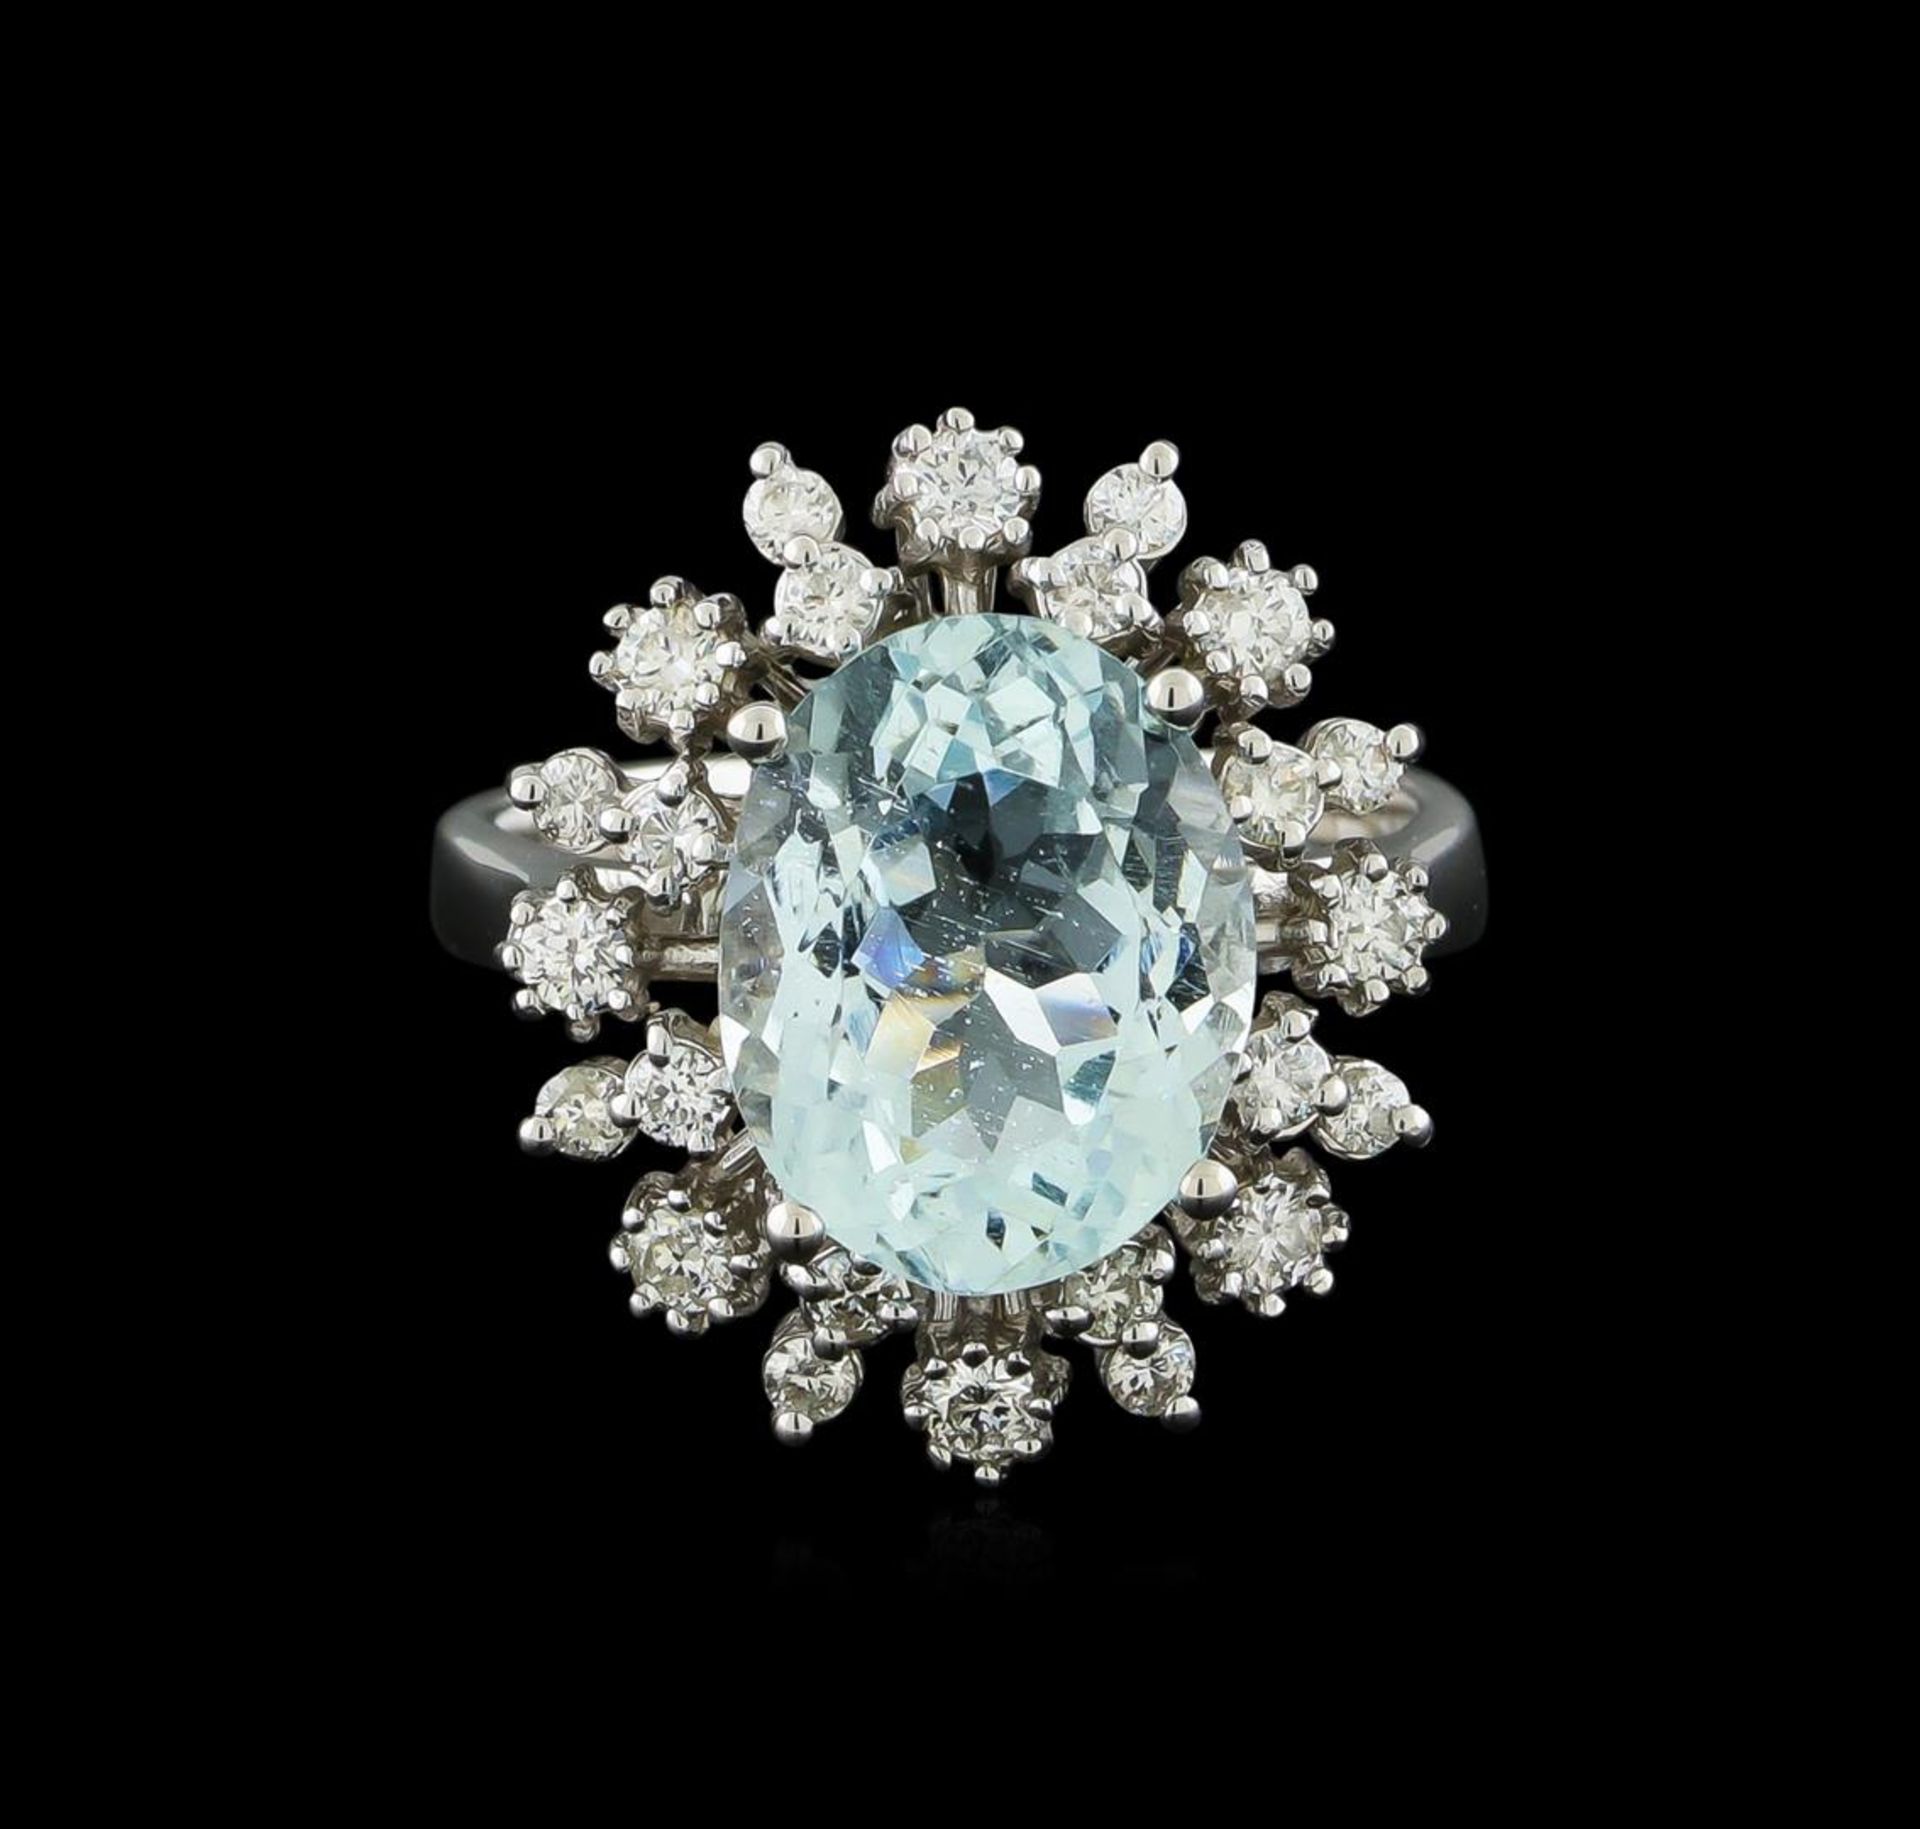 4.3 ctw Aquamarine and Diamond Ring - 14KT White Gold - Image 2 of 4